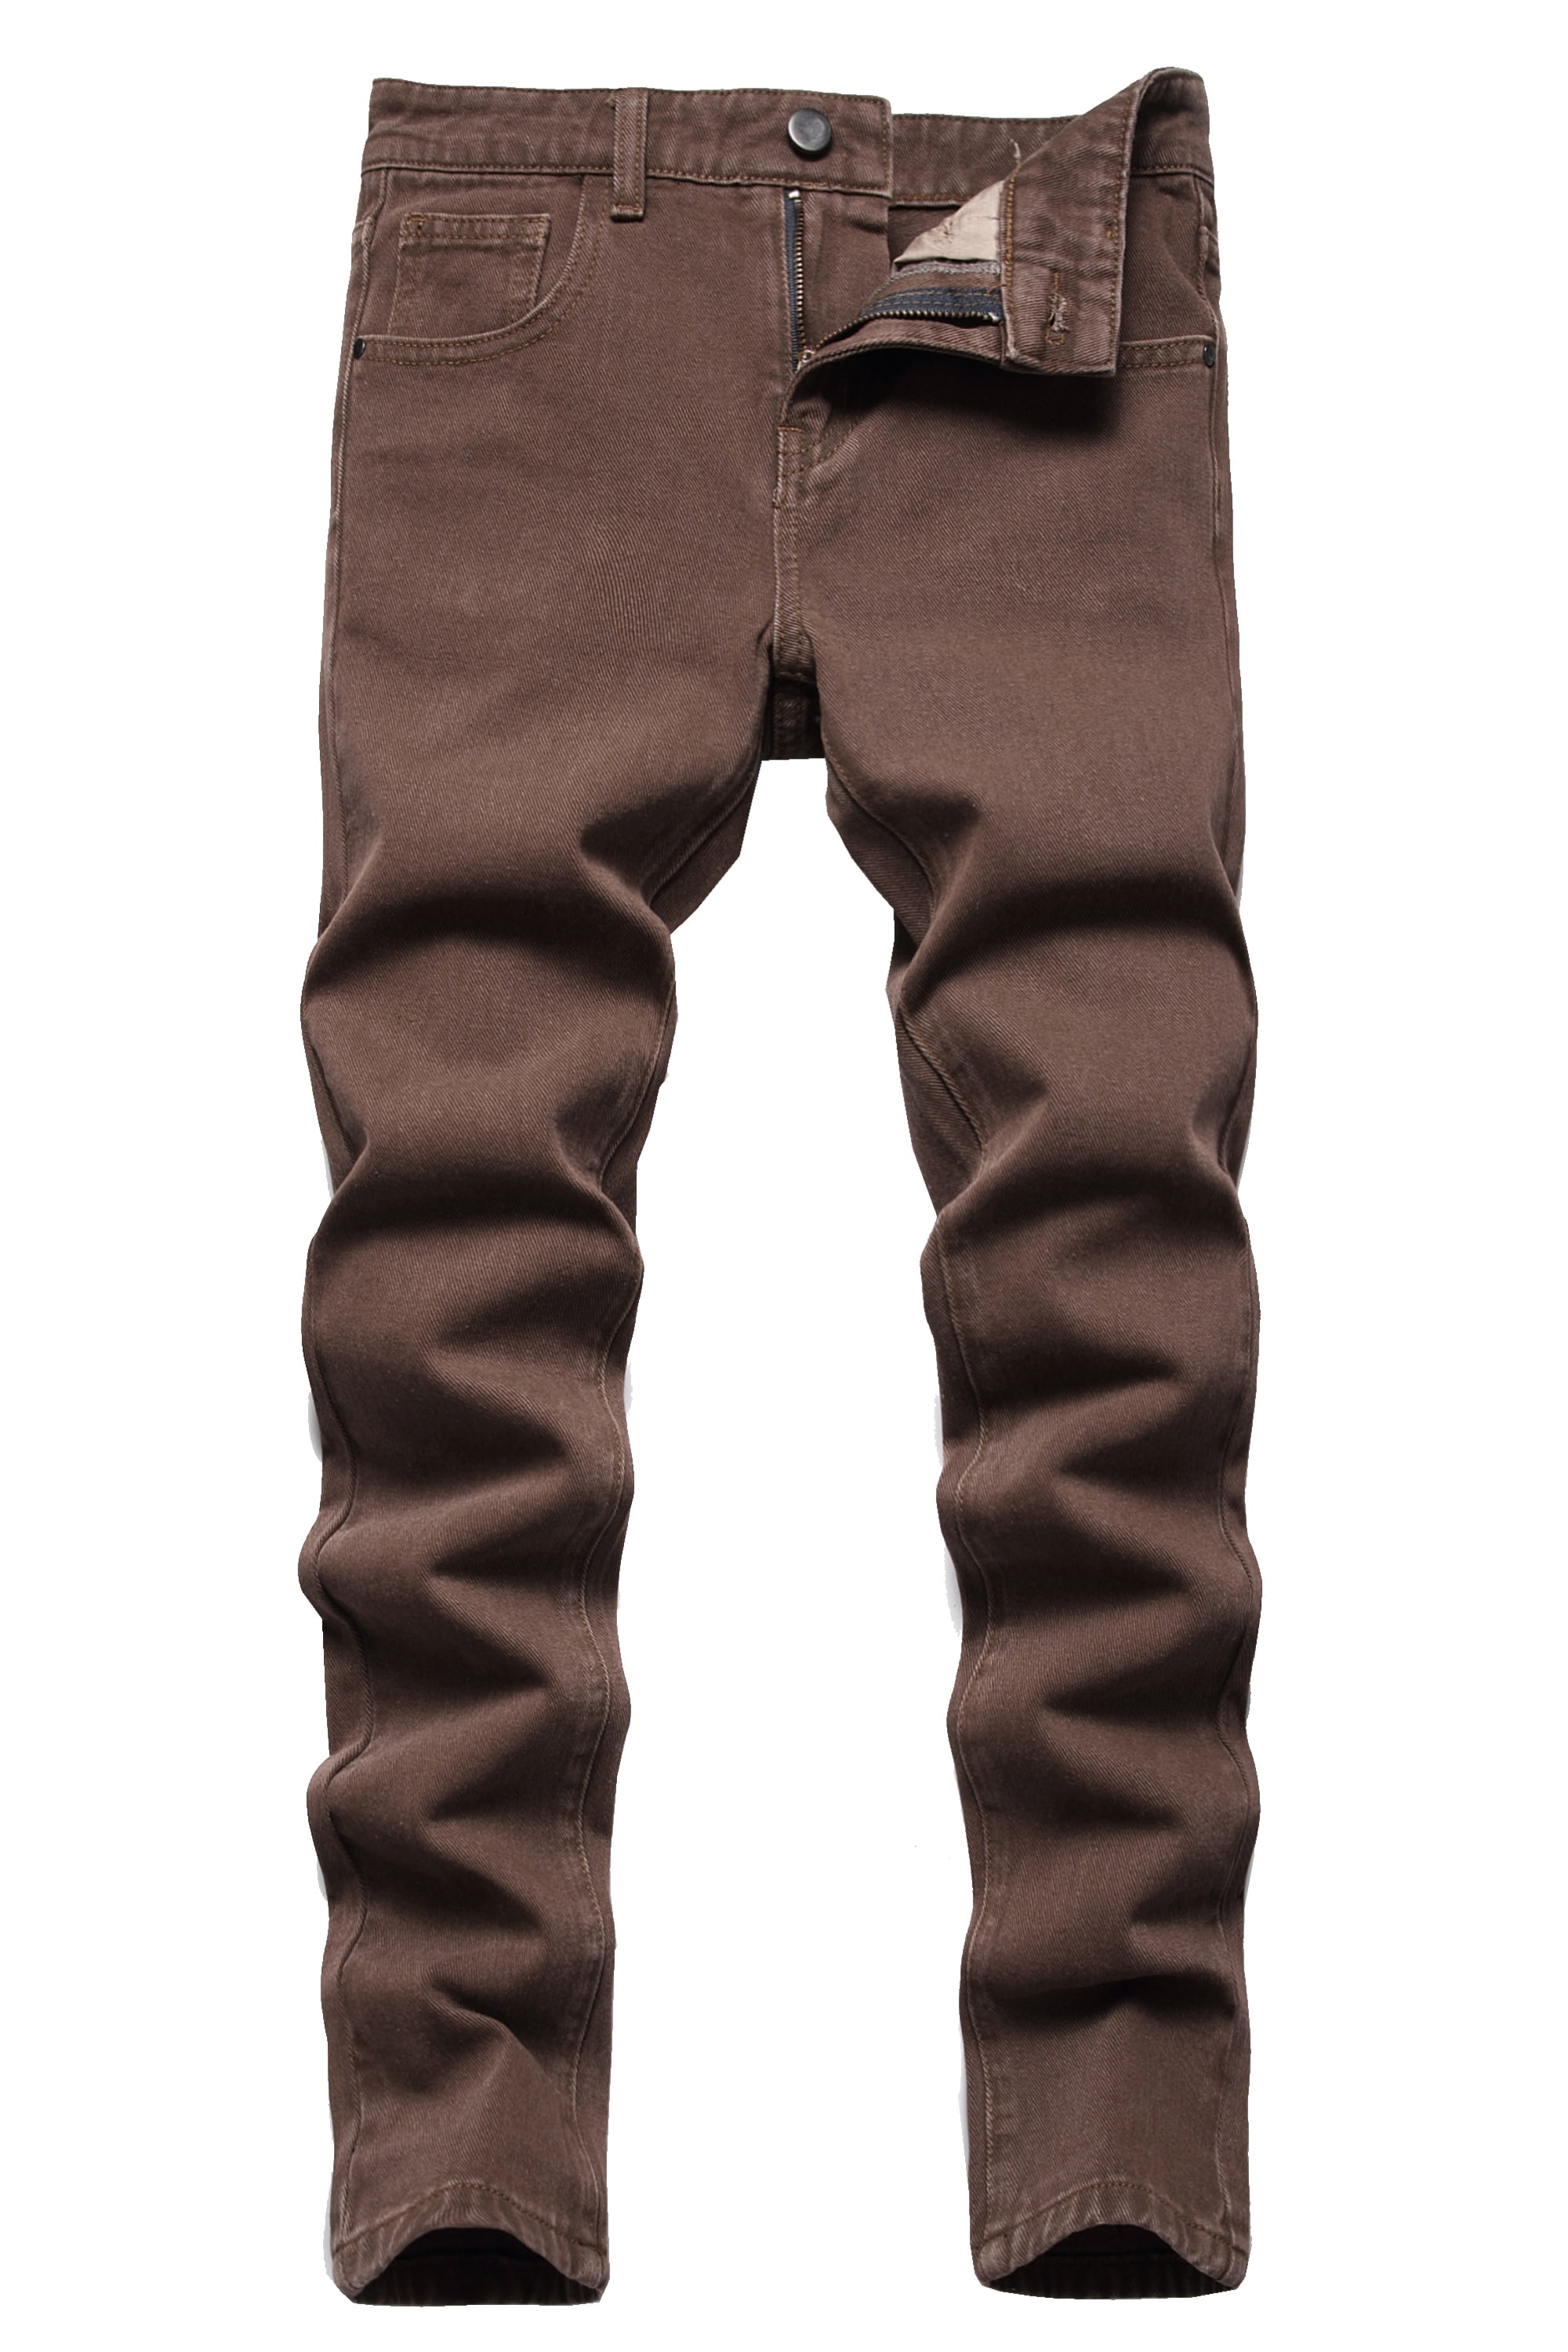 Keevoom Boys Slim Stretch Fit Fashion Jeans Denim Pants - Walmart.com